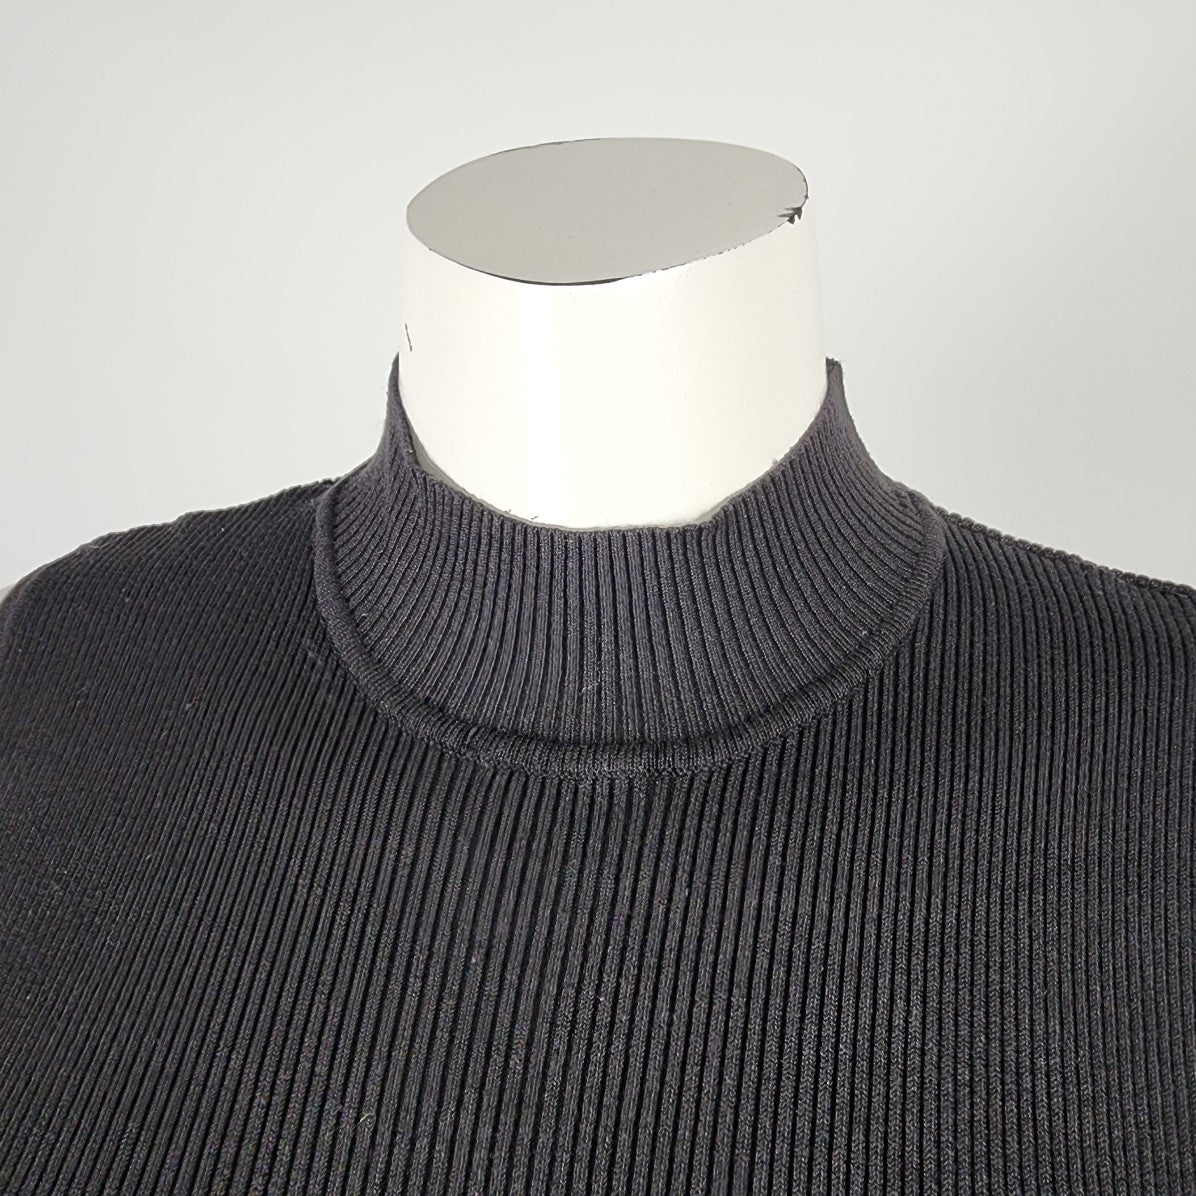 FDJ Black Knit High Neck Sleeveless Top Size S/M